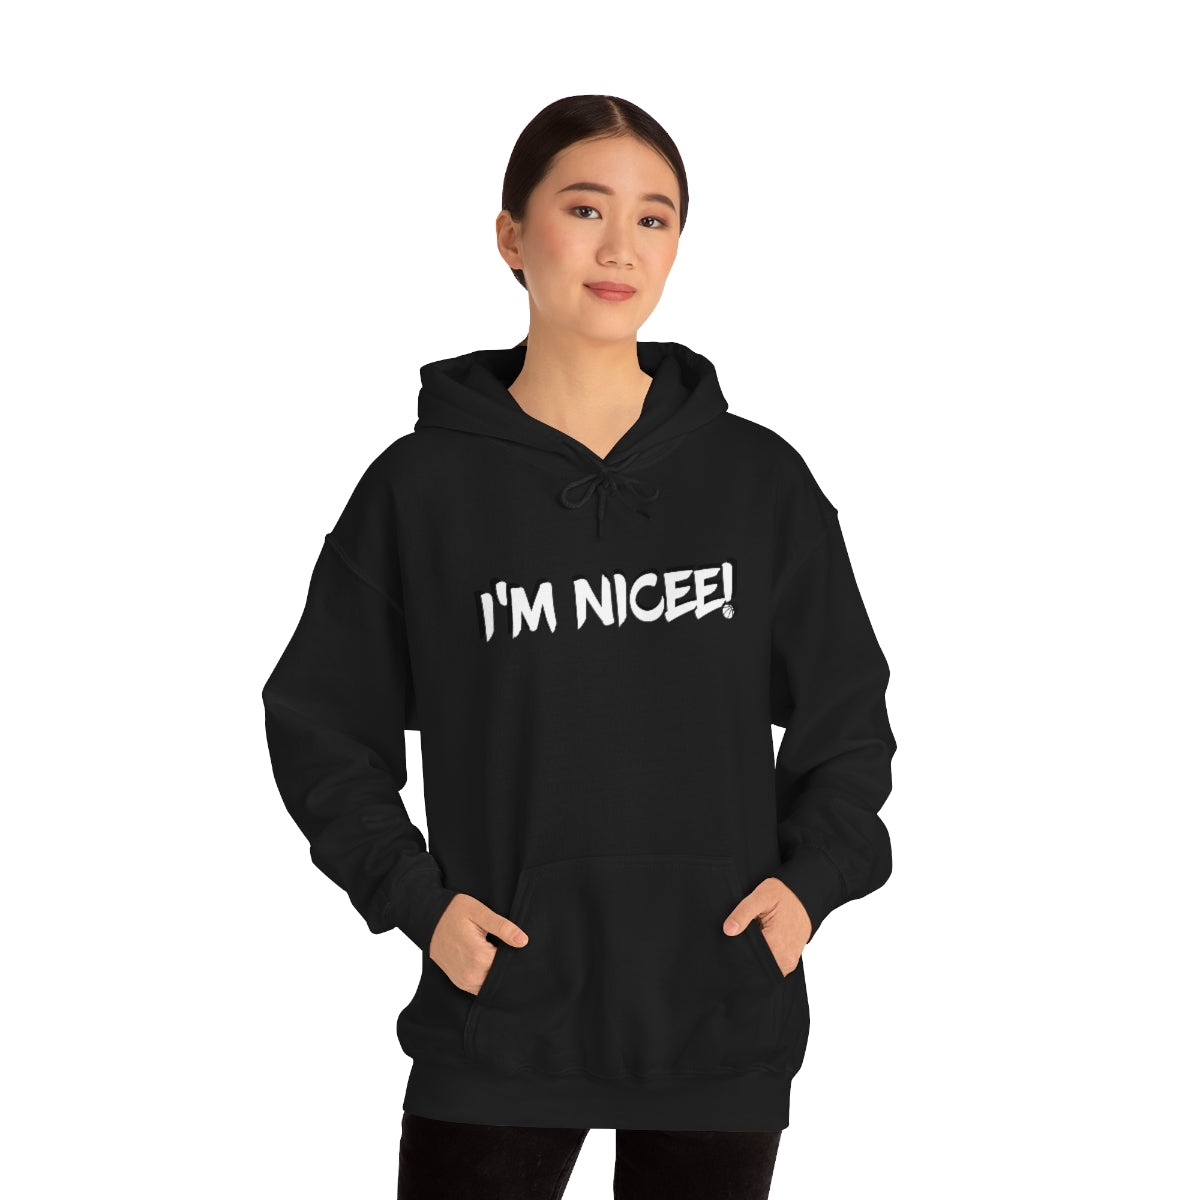 Im Nicee! Sweatshirt